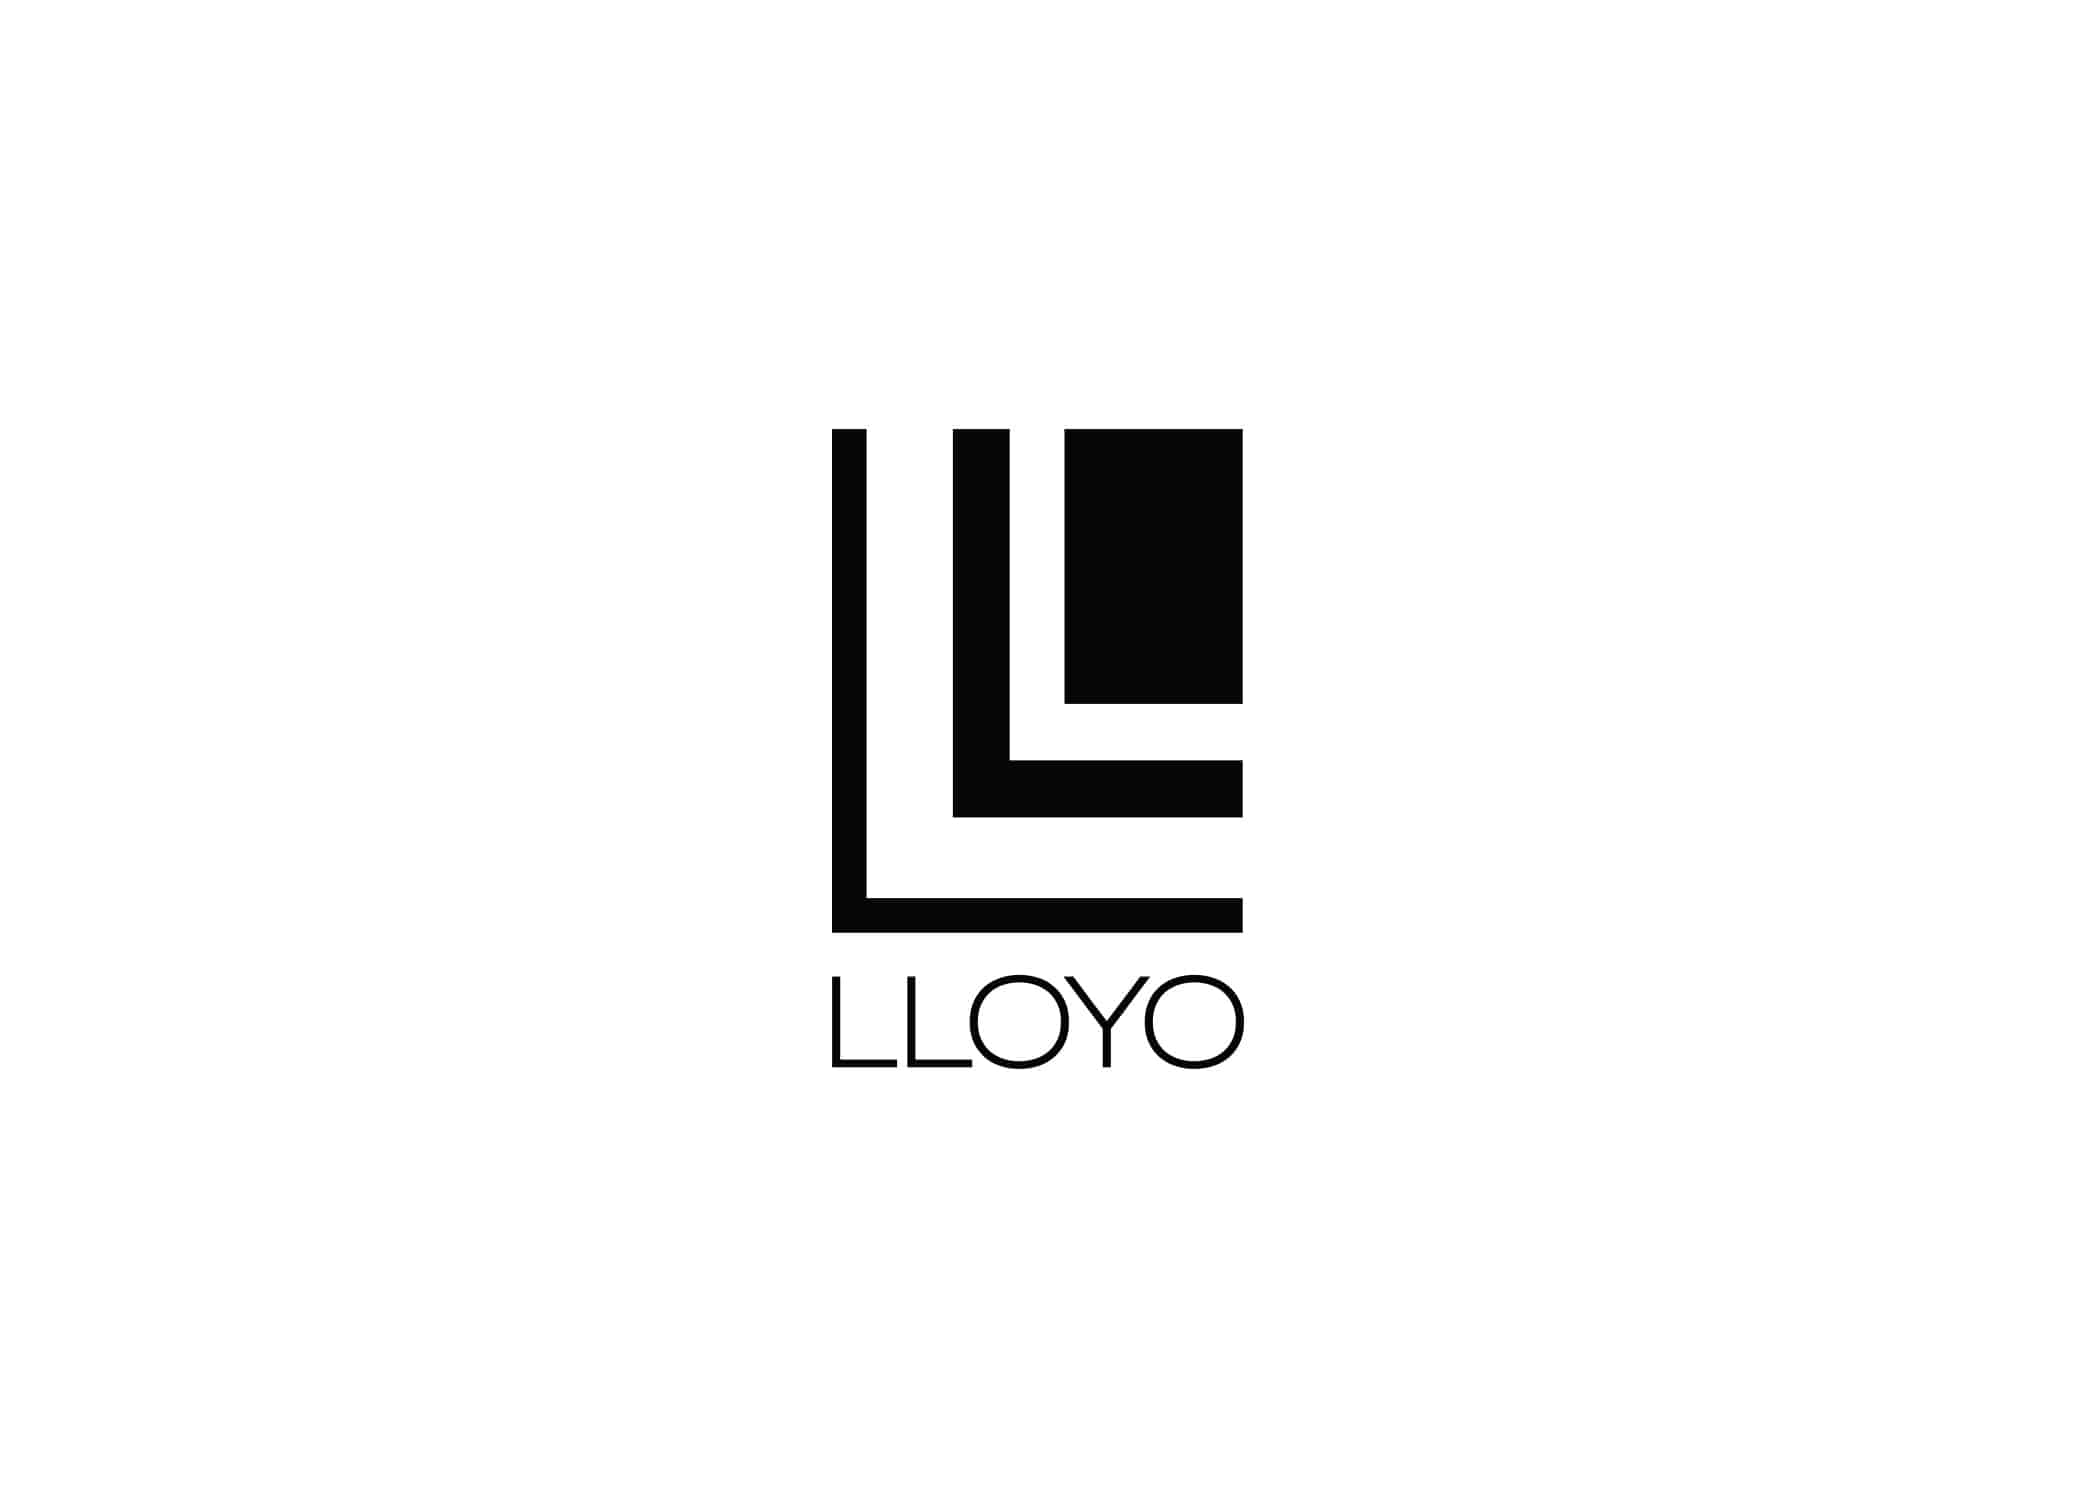 Lloyo black and white logo design with a double “L" pattern above svelte san serif font.